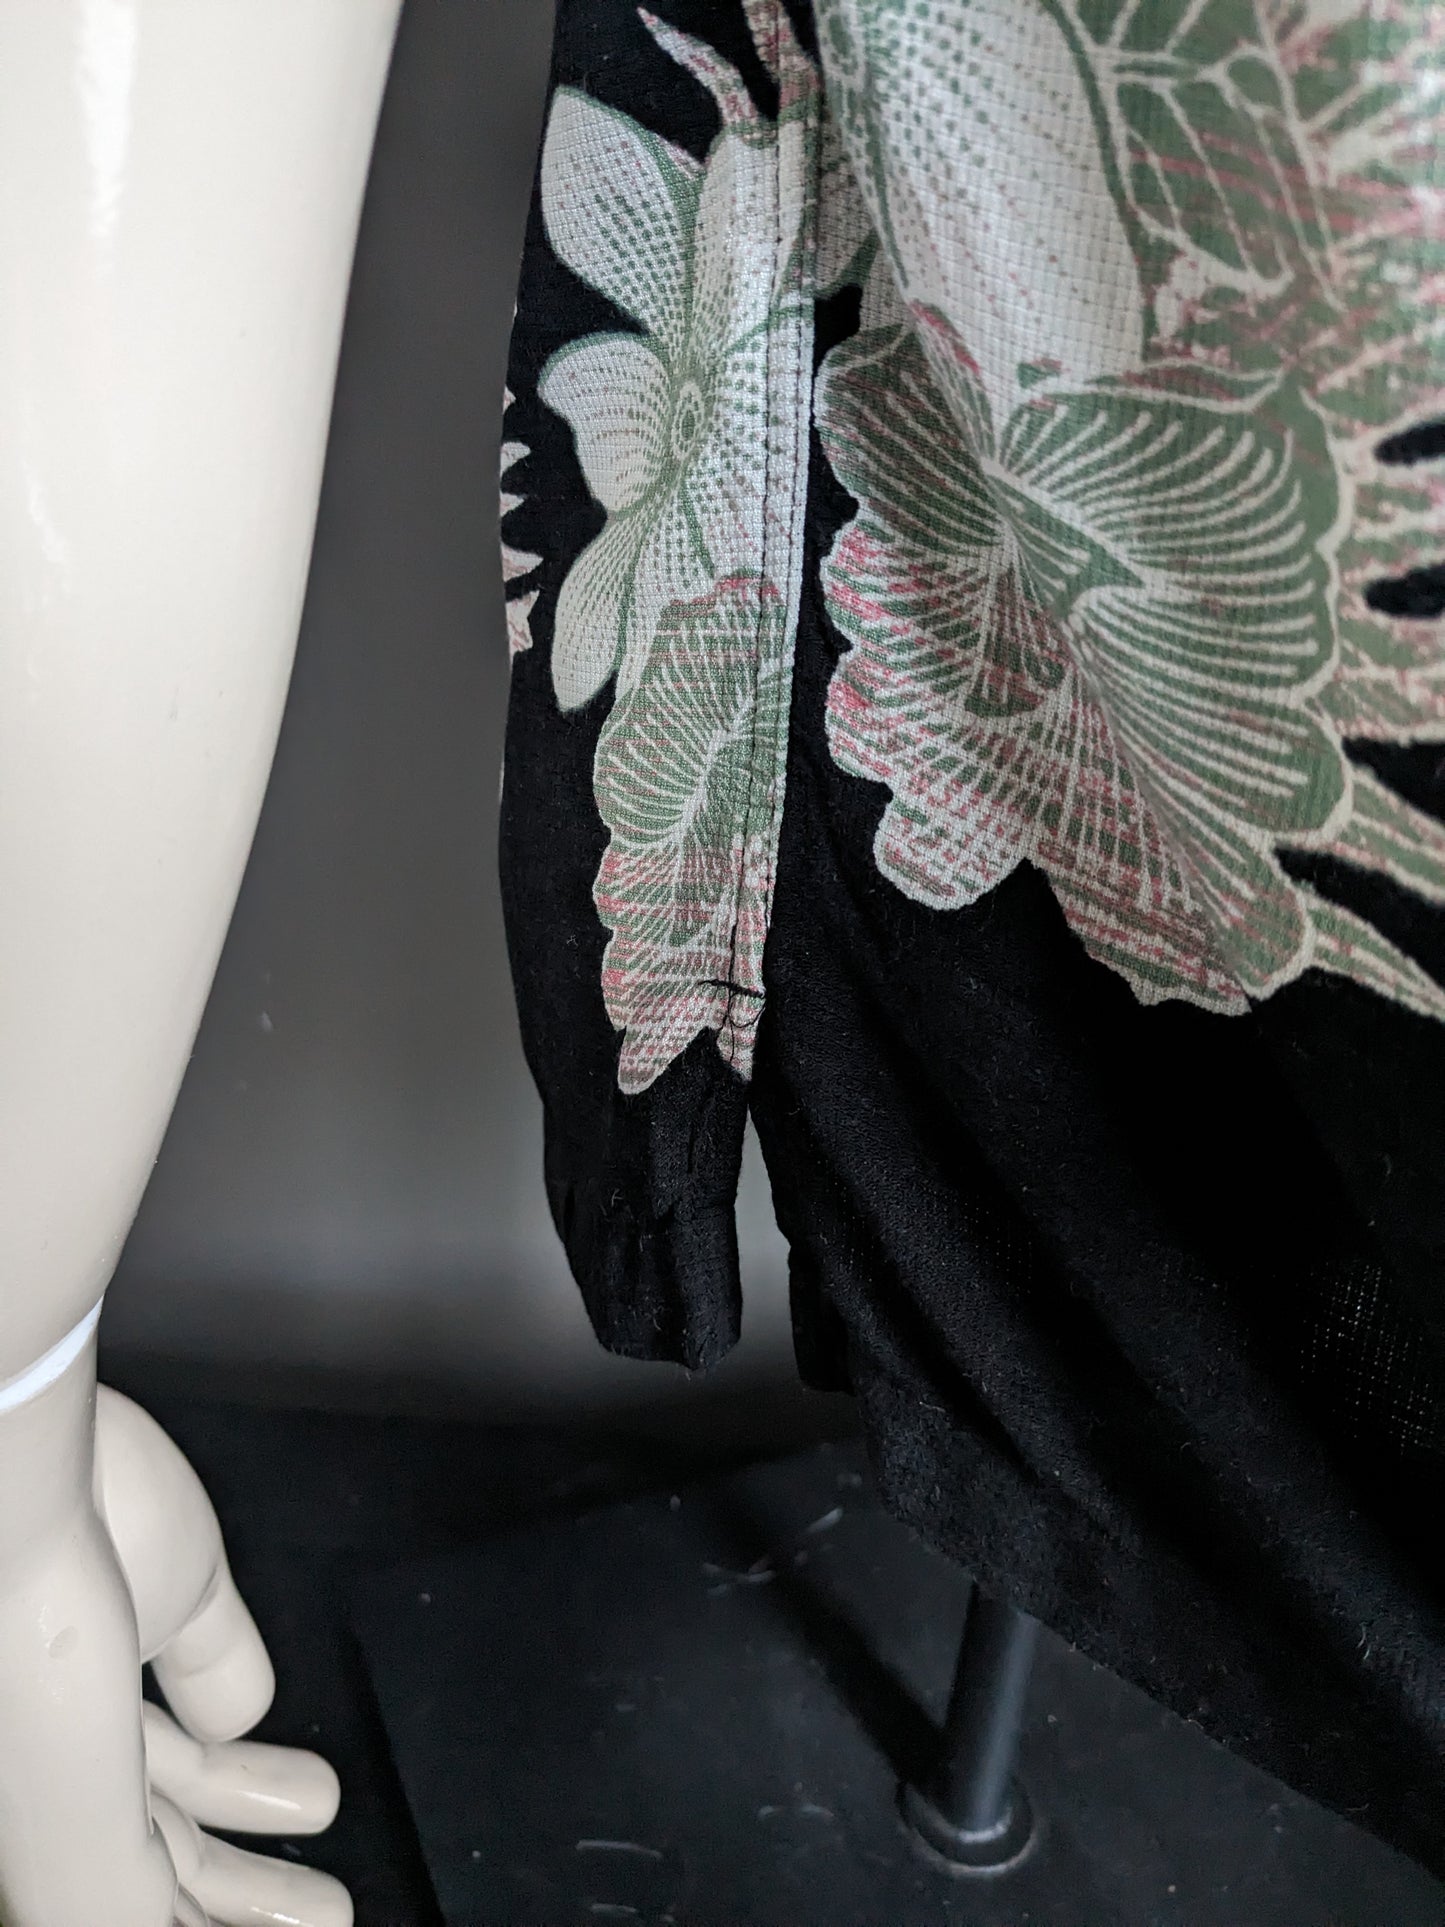 Caribbean Original Silk Hawaii Shirt Short Sleeve. Black green red beige floral print. Size M. 55% silk.